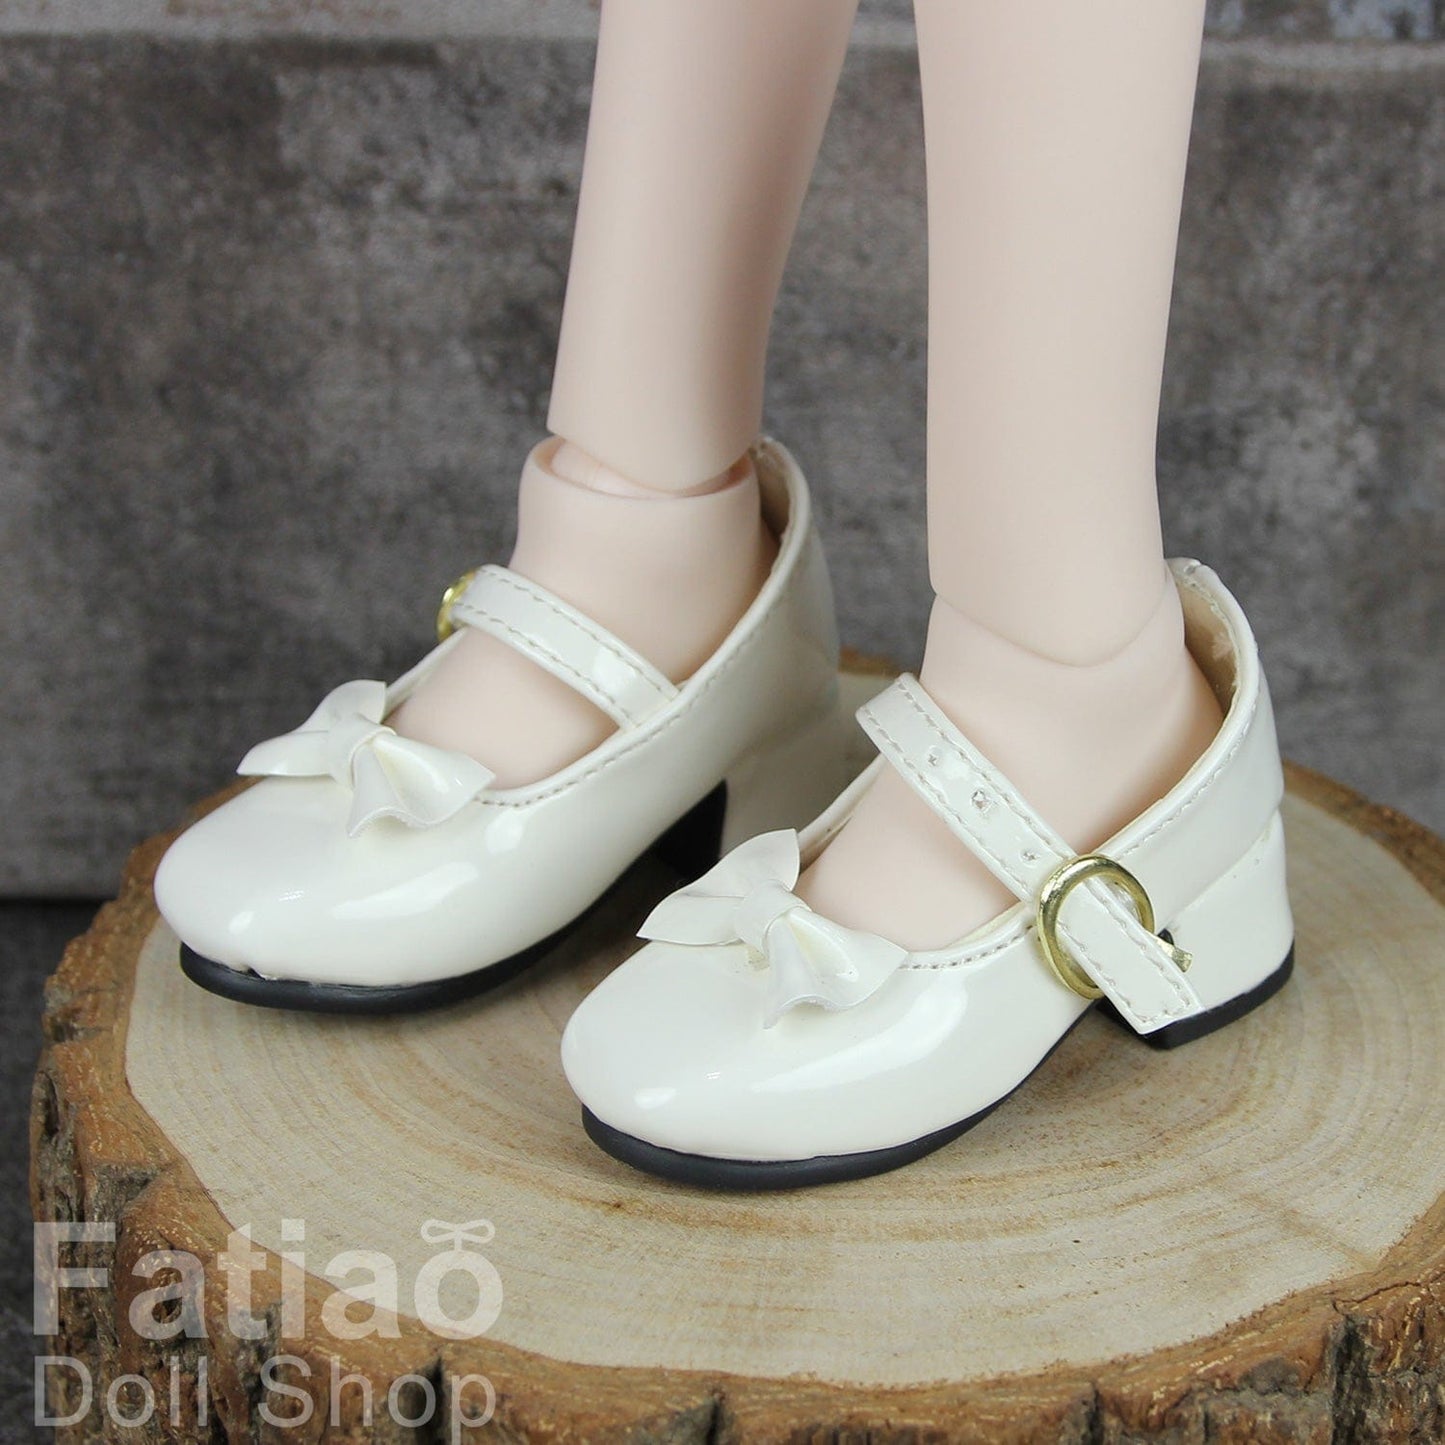 【Fatiao Doll Shop】Bow Mary Jane C3 Multicolor / BJD SD10 SD13 DD 1/3 scale 